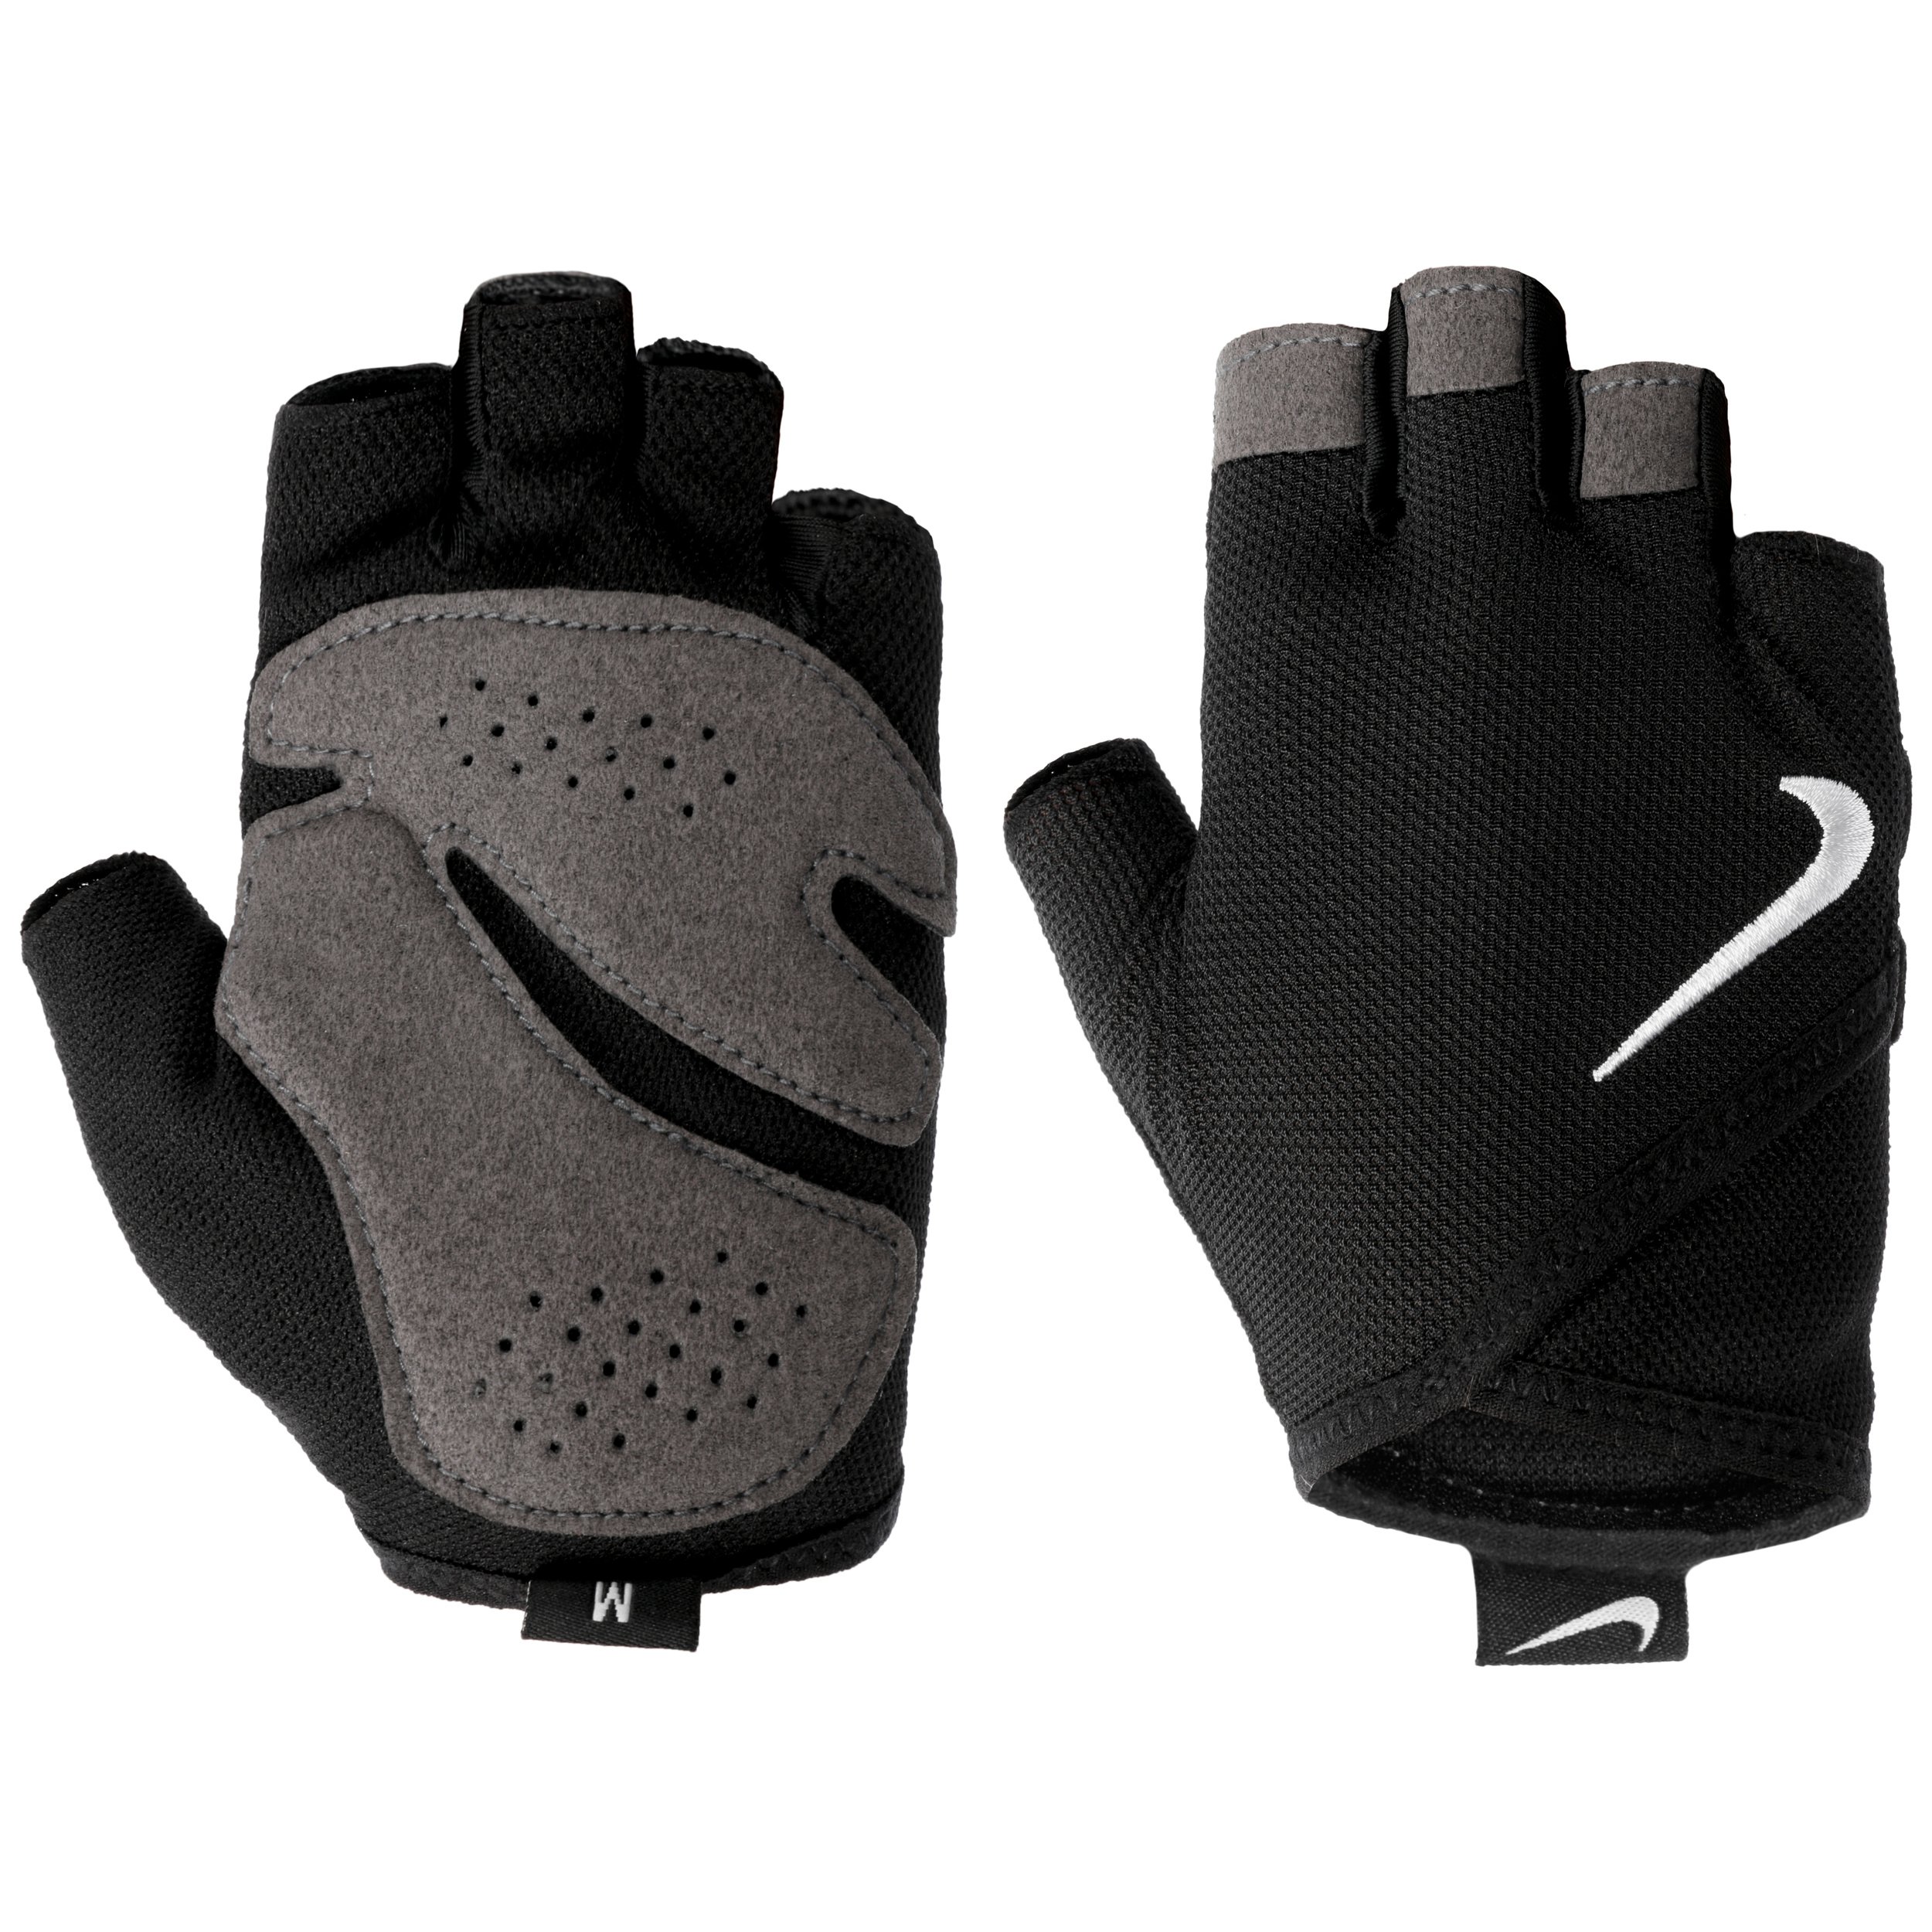 https://img.hatshopping.com/Women-s-Gym-Essential-Fitness-Gloves-by-Nike-black.62834_rf4.jpg